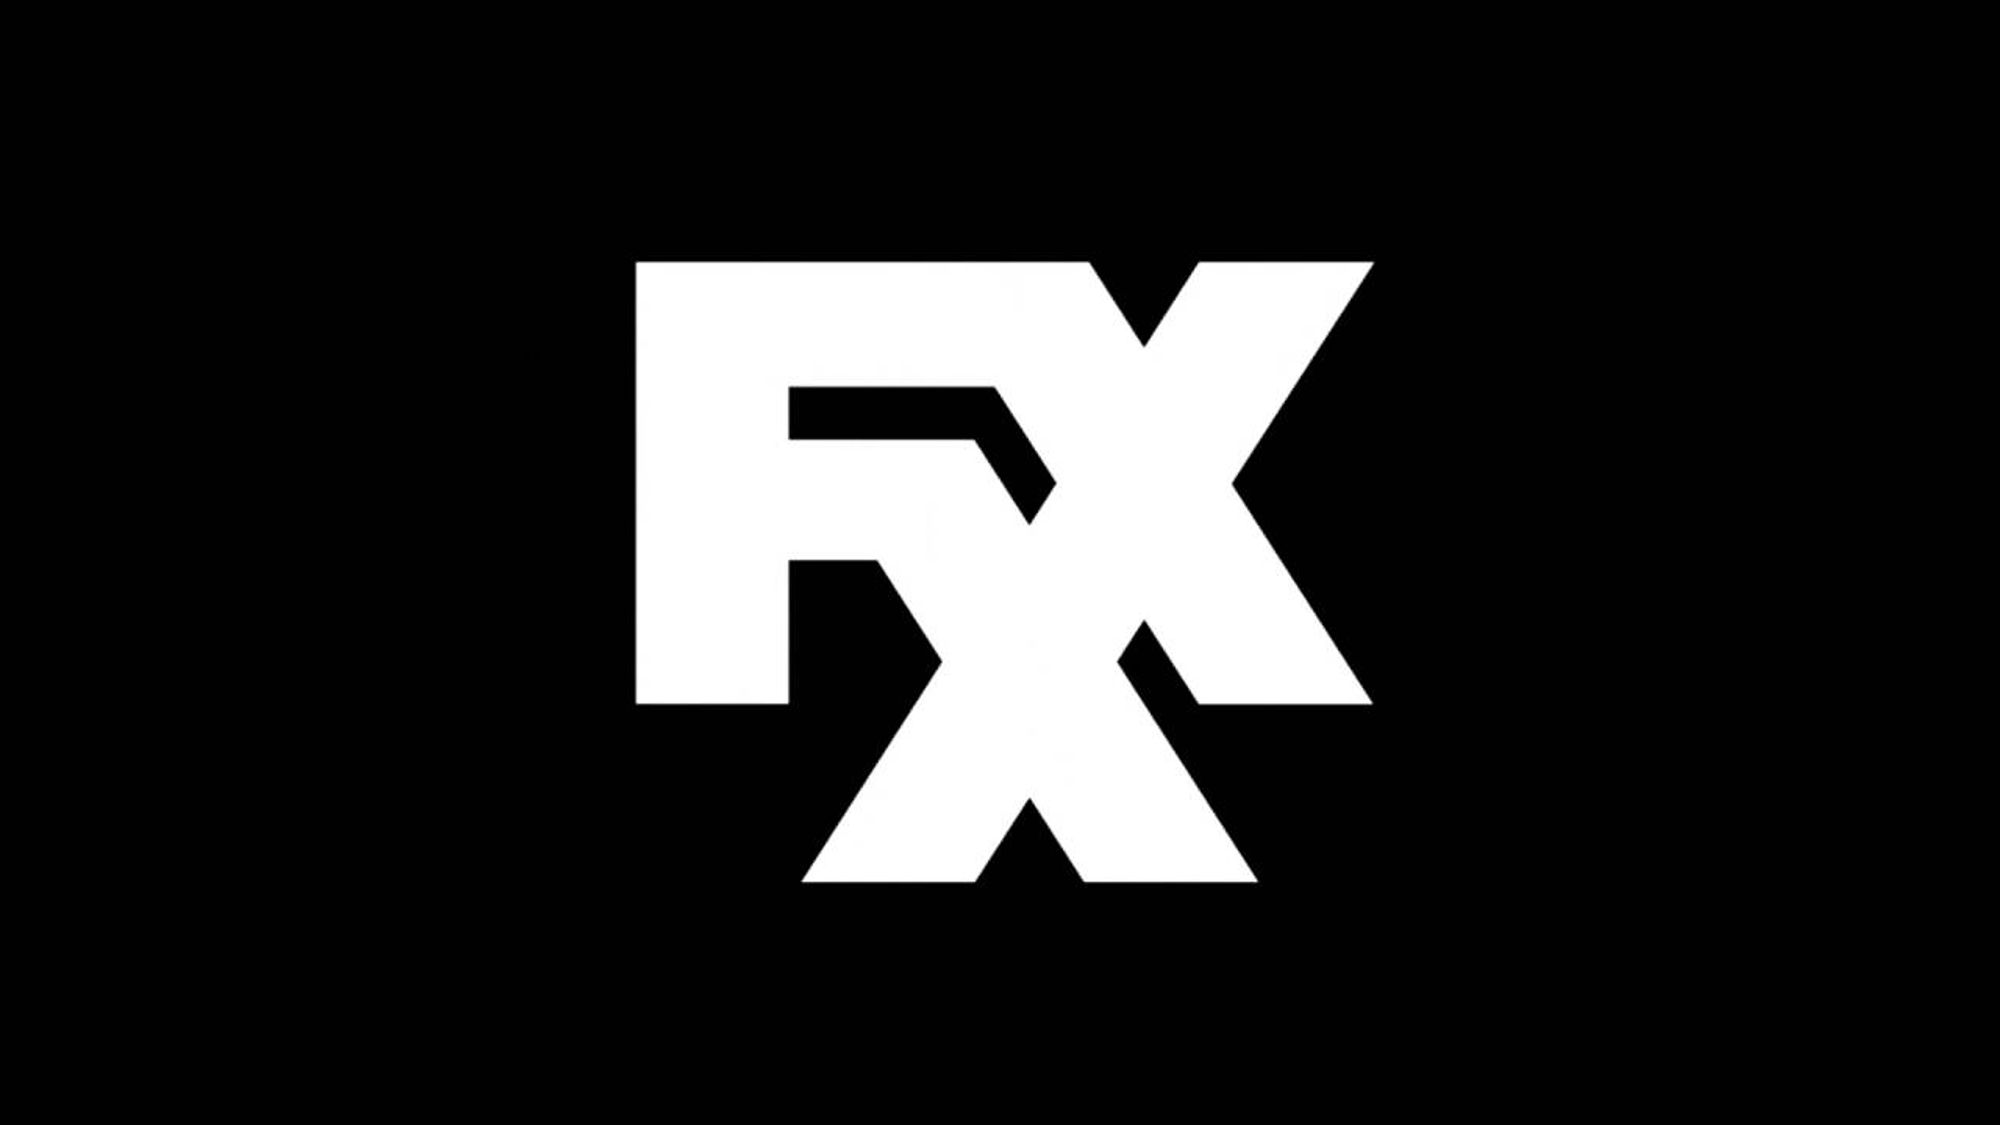 fxx logo.jpg